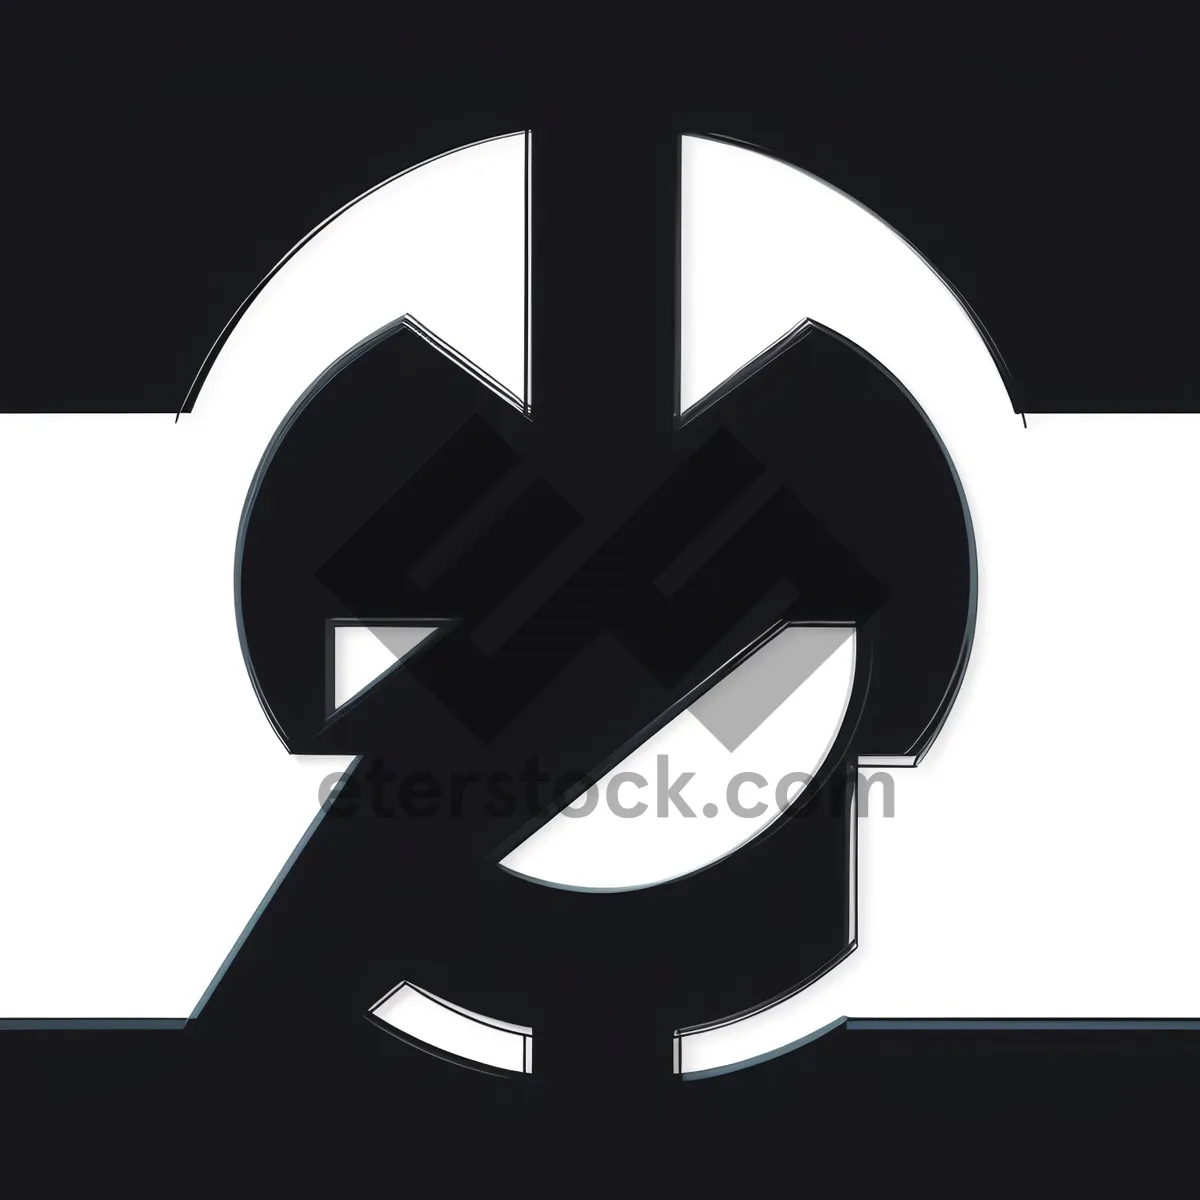 Picture of Black graphic symbol sign icon design